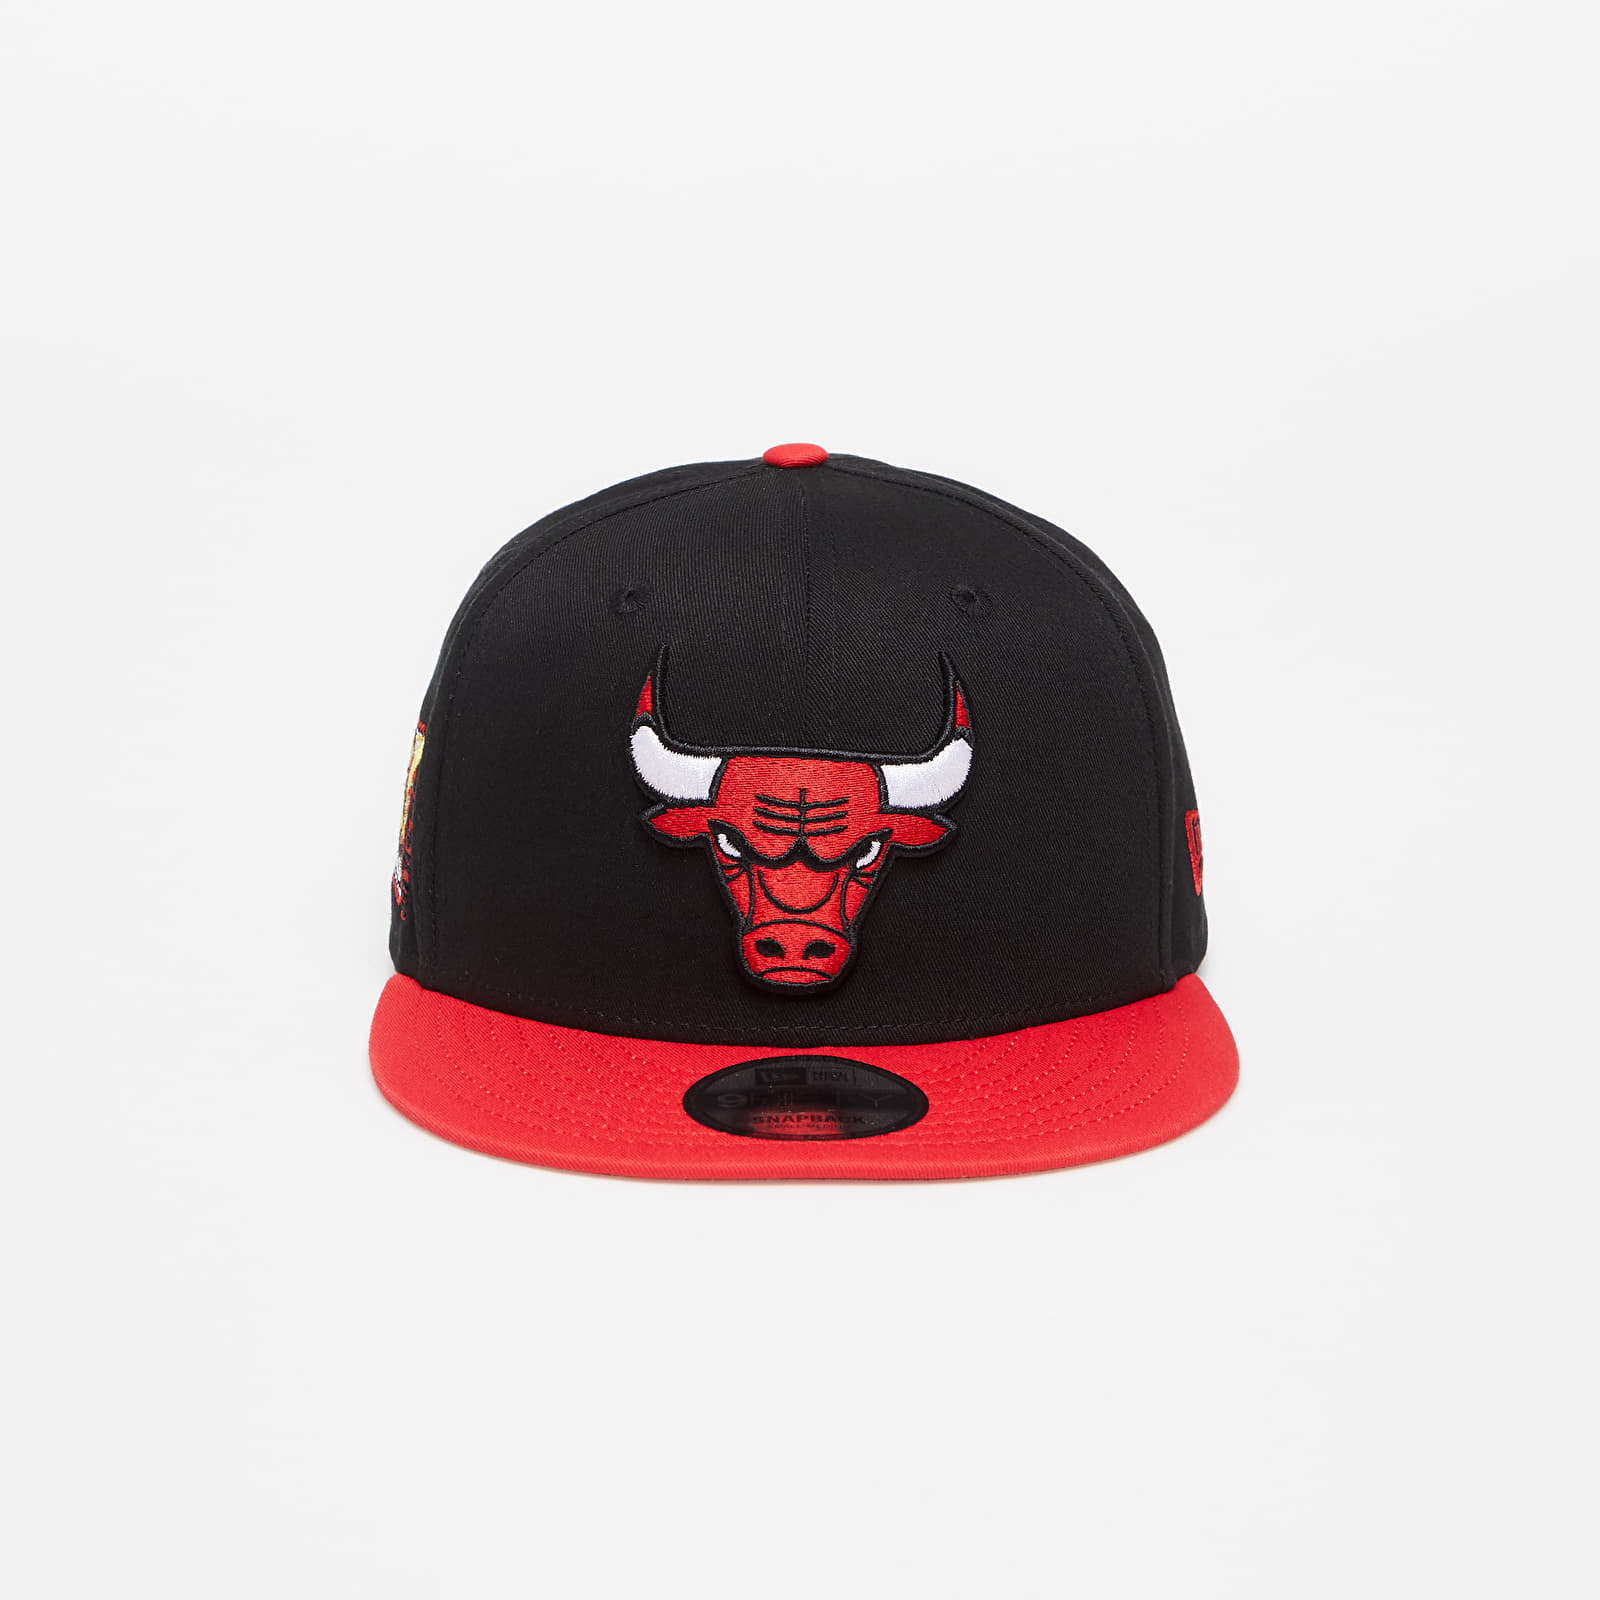 New Era - chicago bulls team patch 9fifty snapback cap black/ red